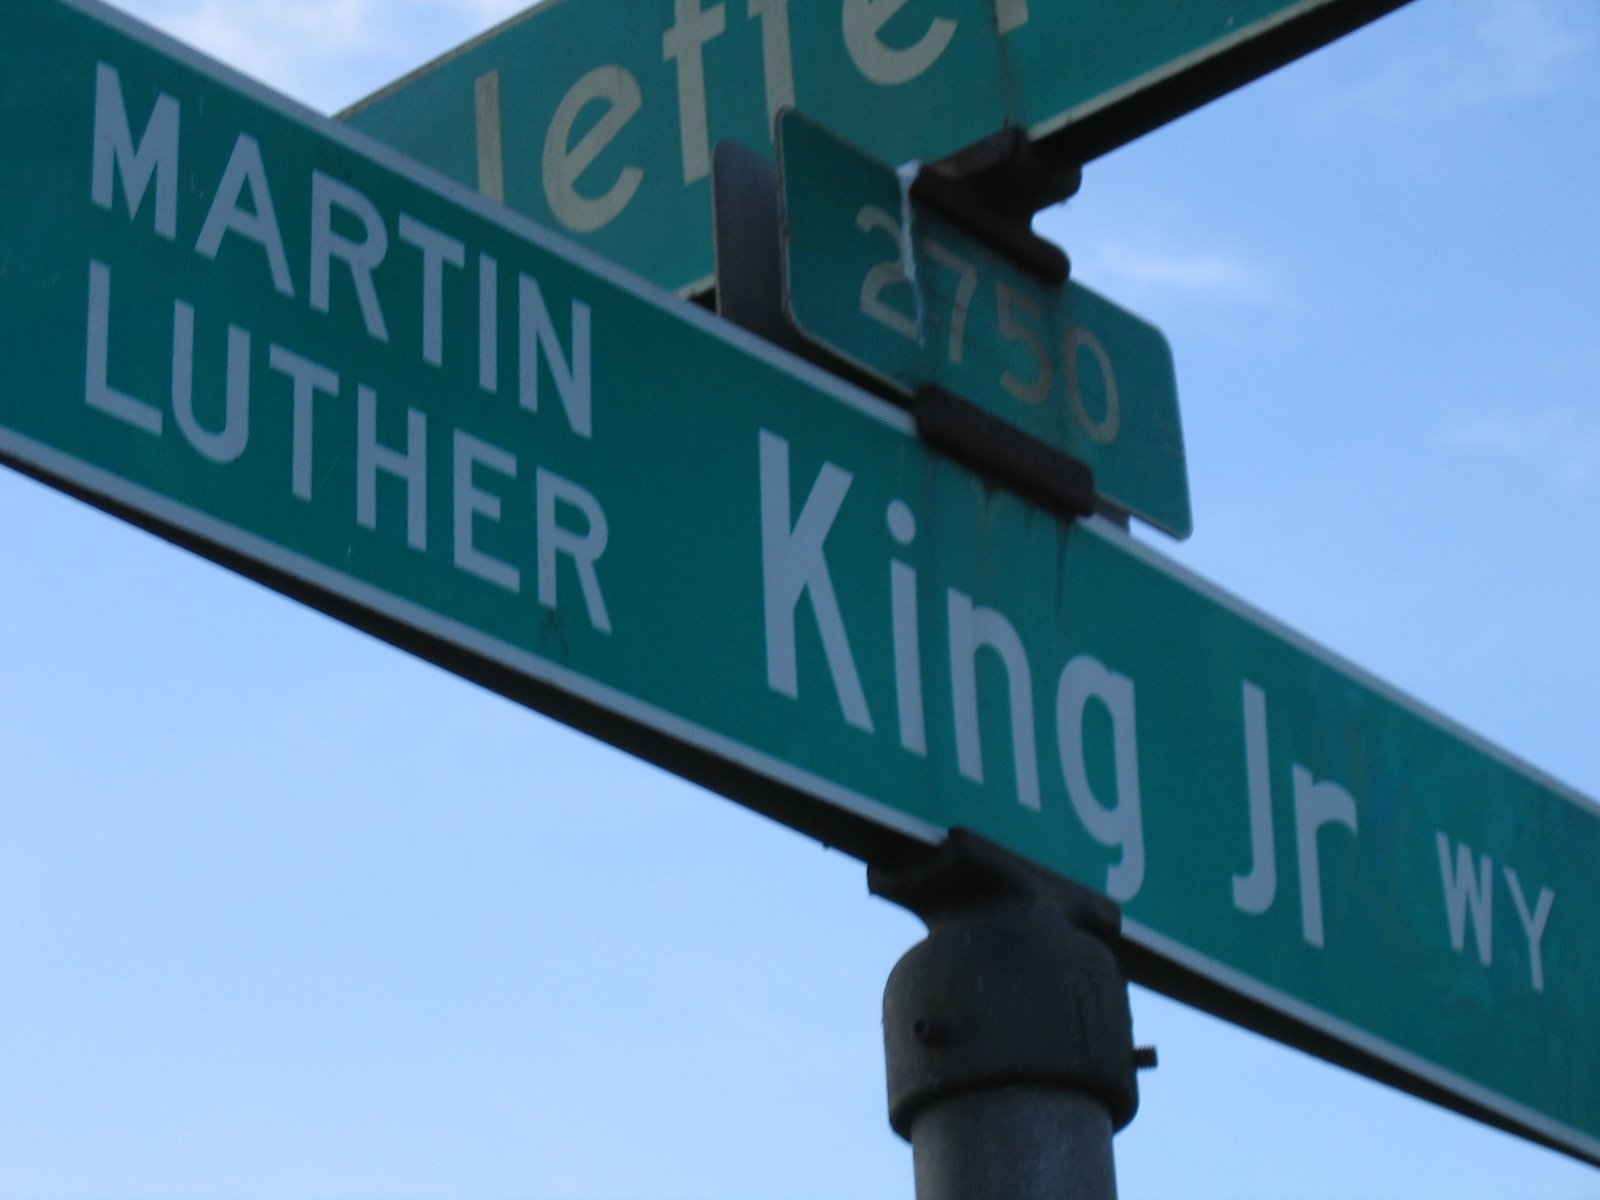 MLK street sign